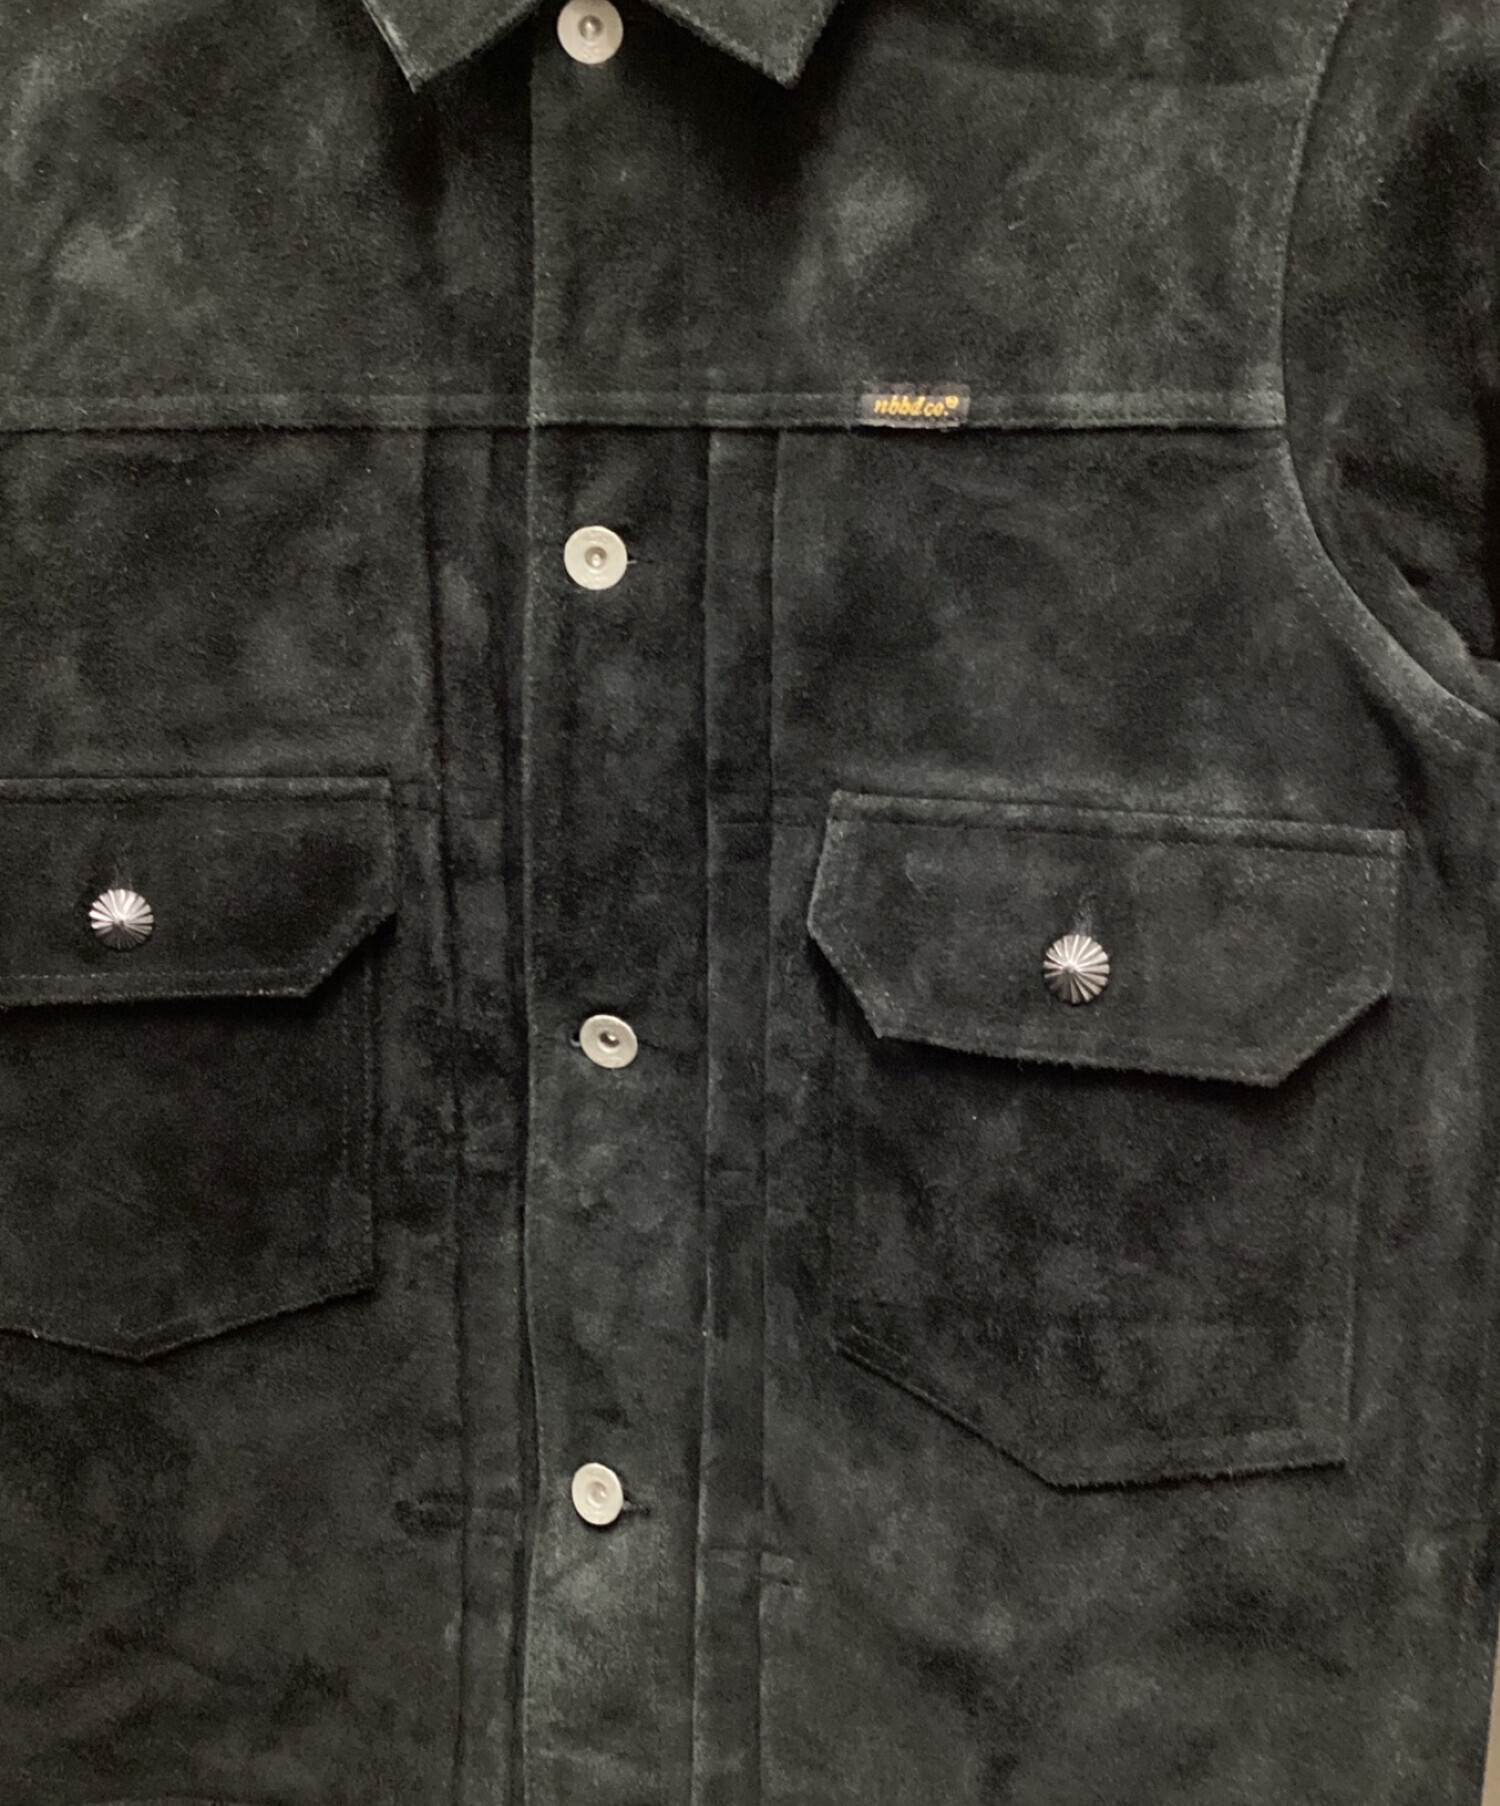 NEIGHBORHOOD (ネイバーフッド) スウェードジャケット ブラック サイズ:M